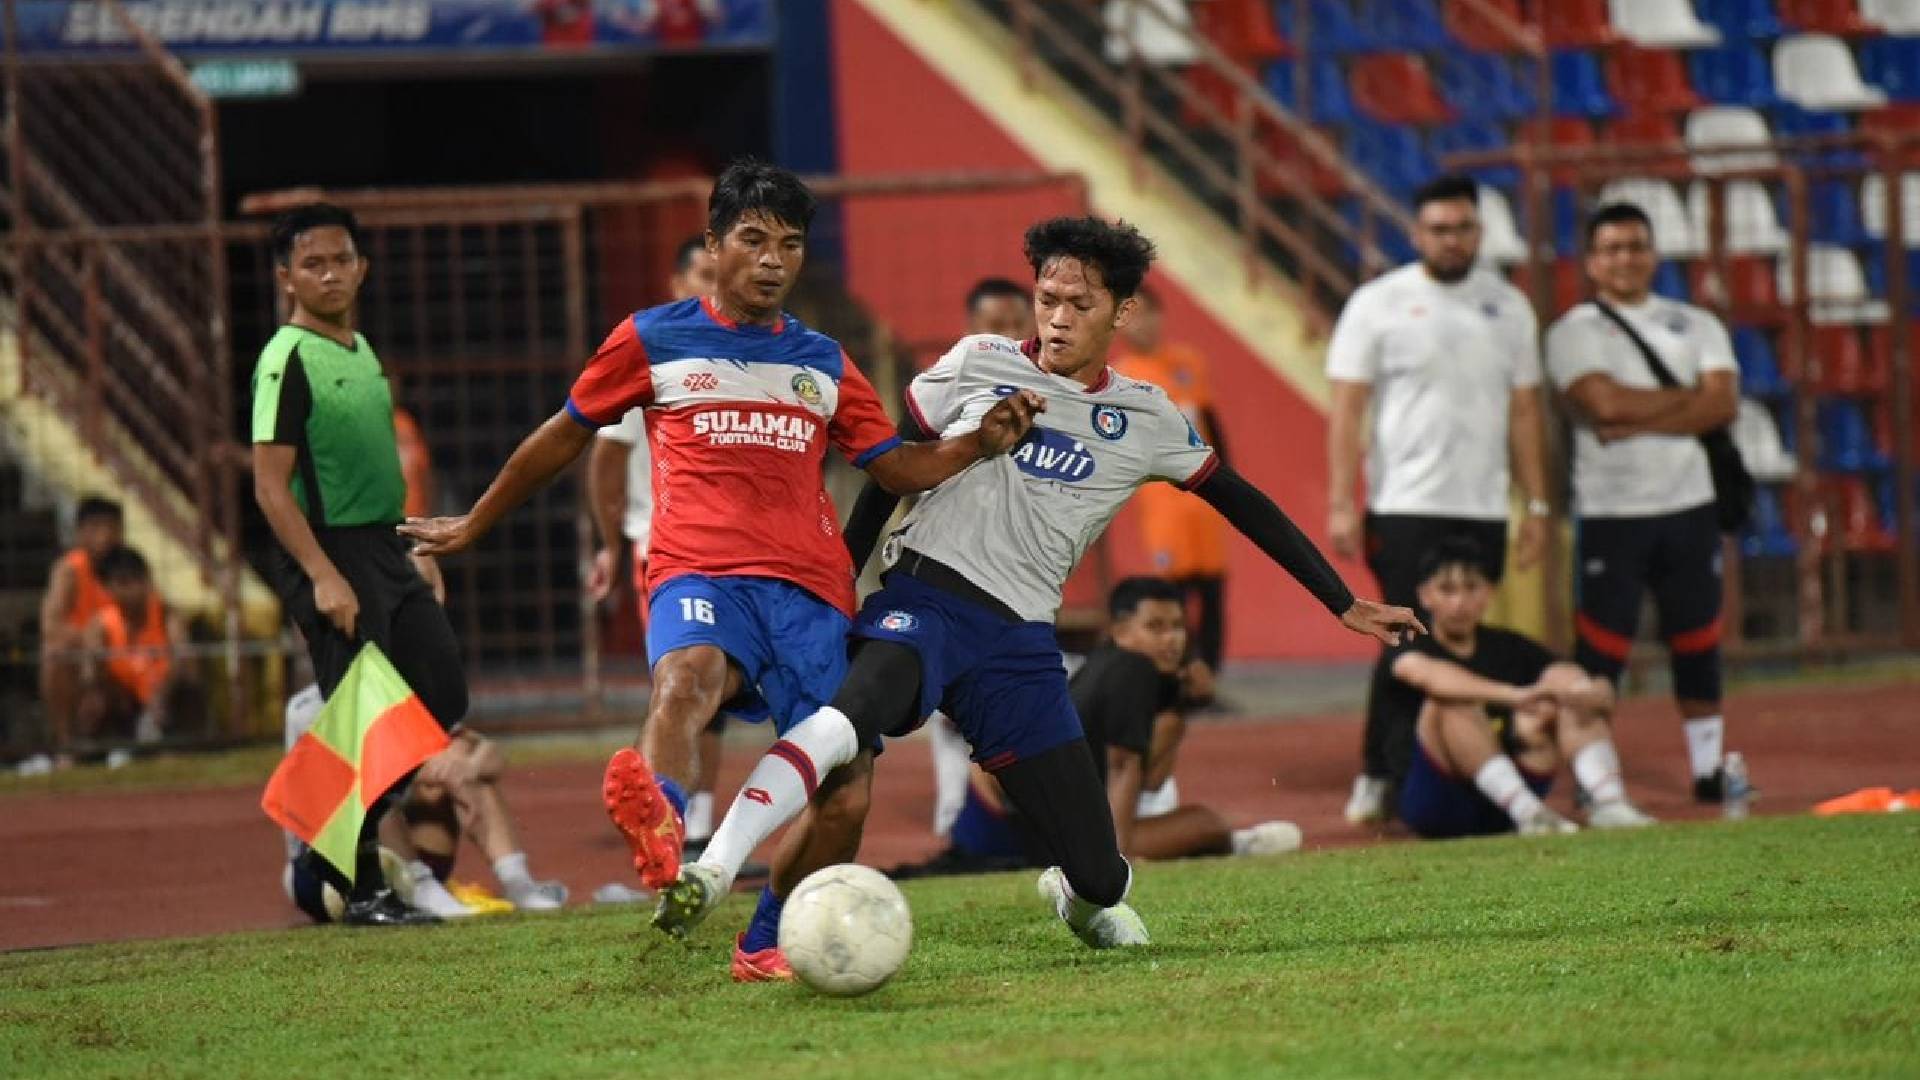 Skuad Muda Sabah Atasi Sulaman FC 7-4